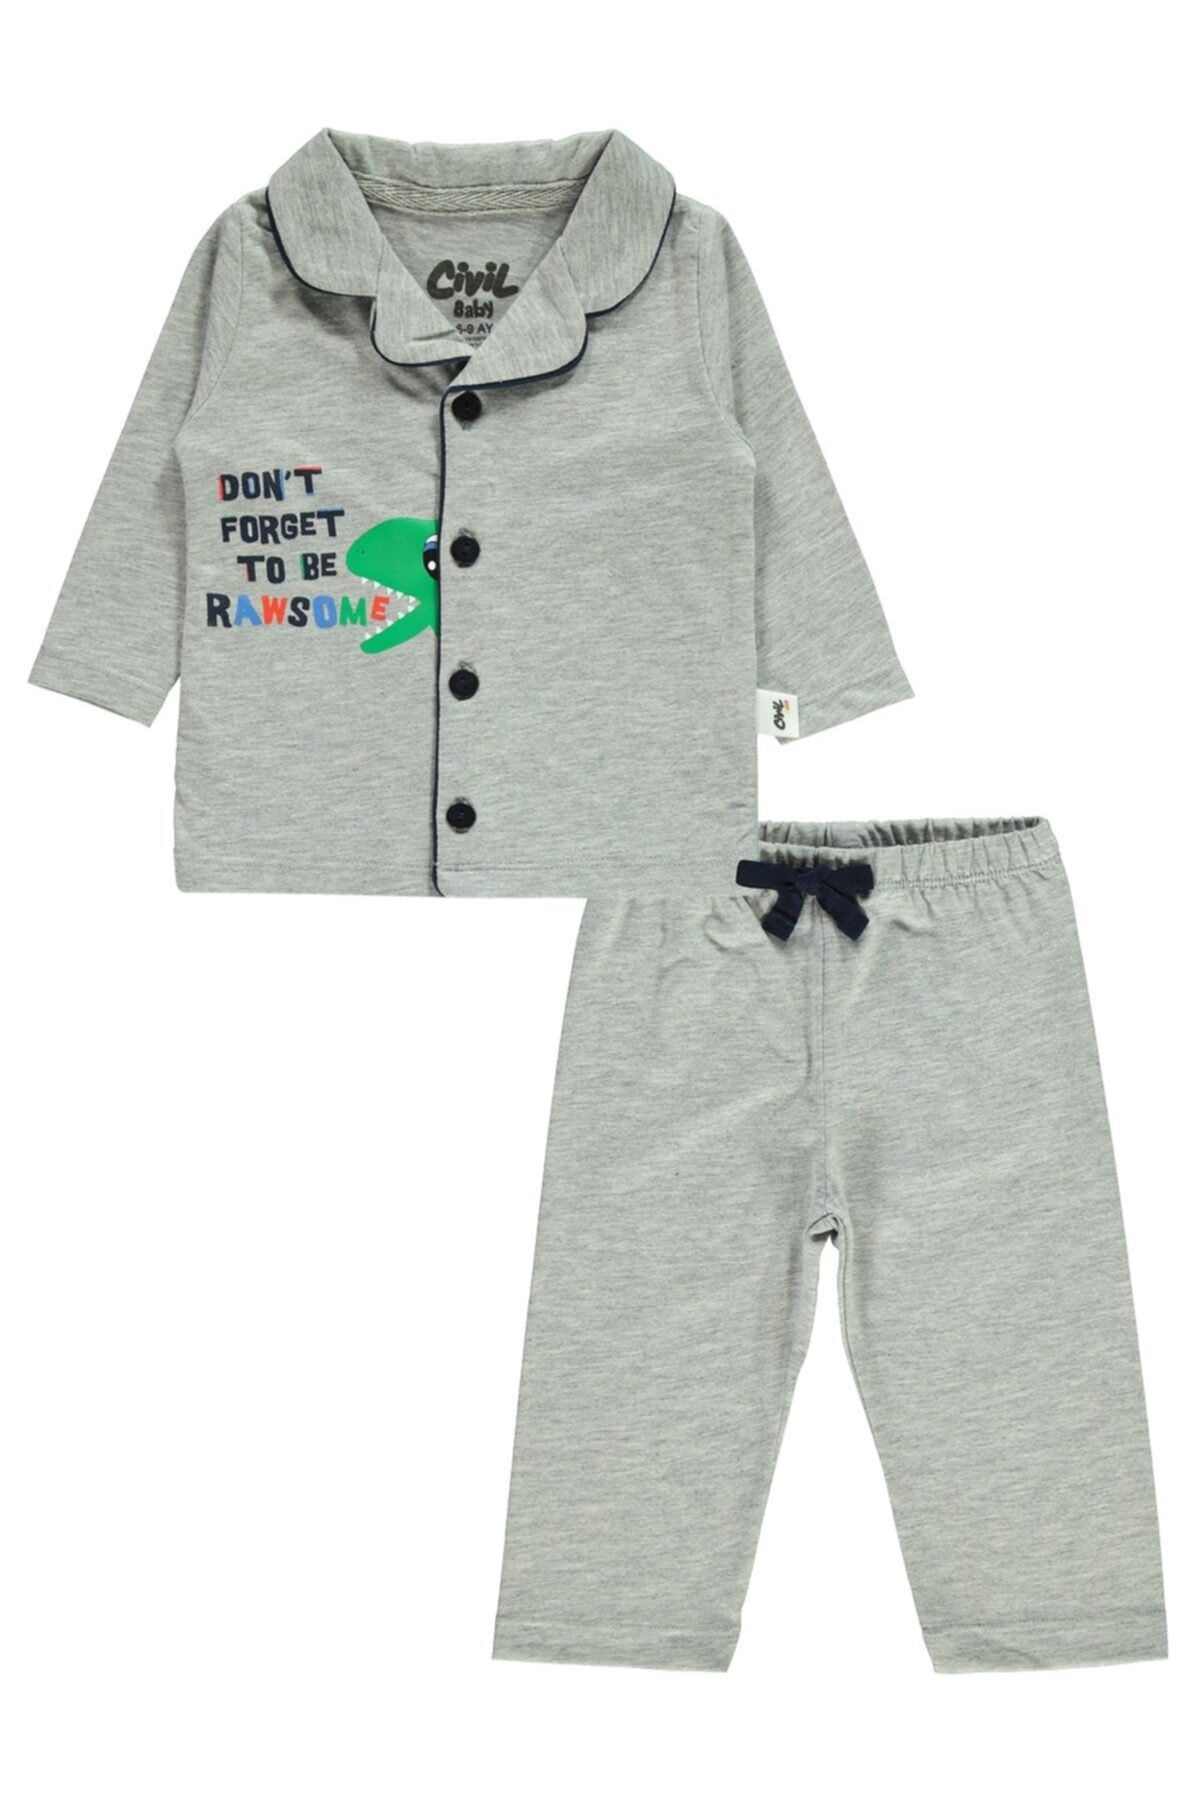 Civil Baby Erkek Bebek Gri Pijama Takımı 6-18 Ay